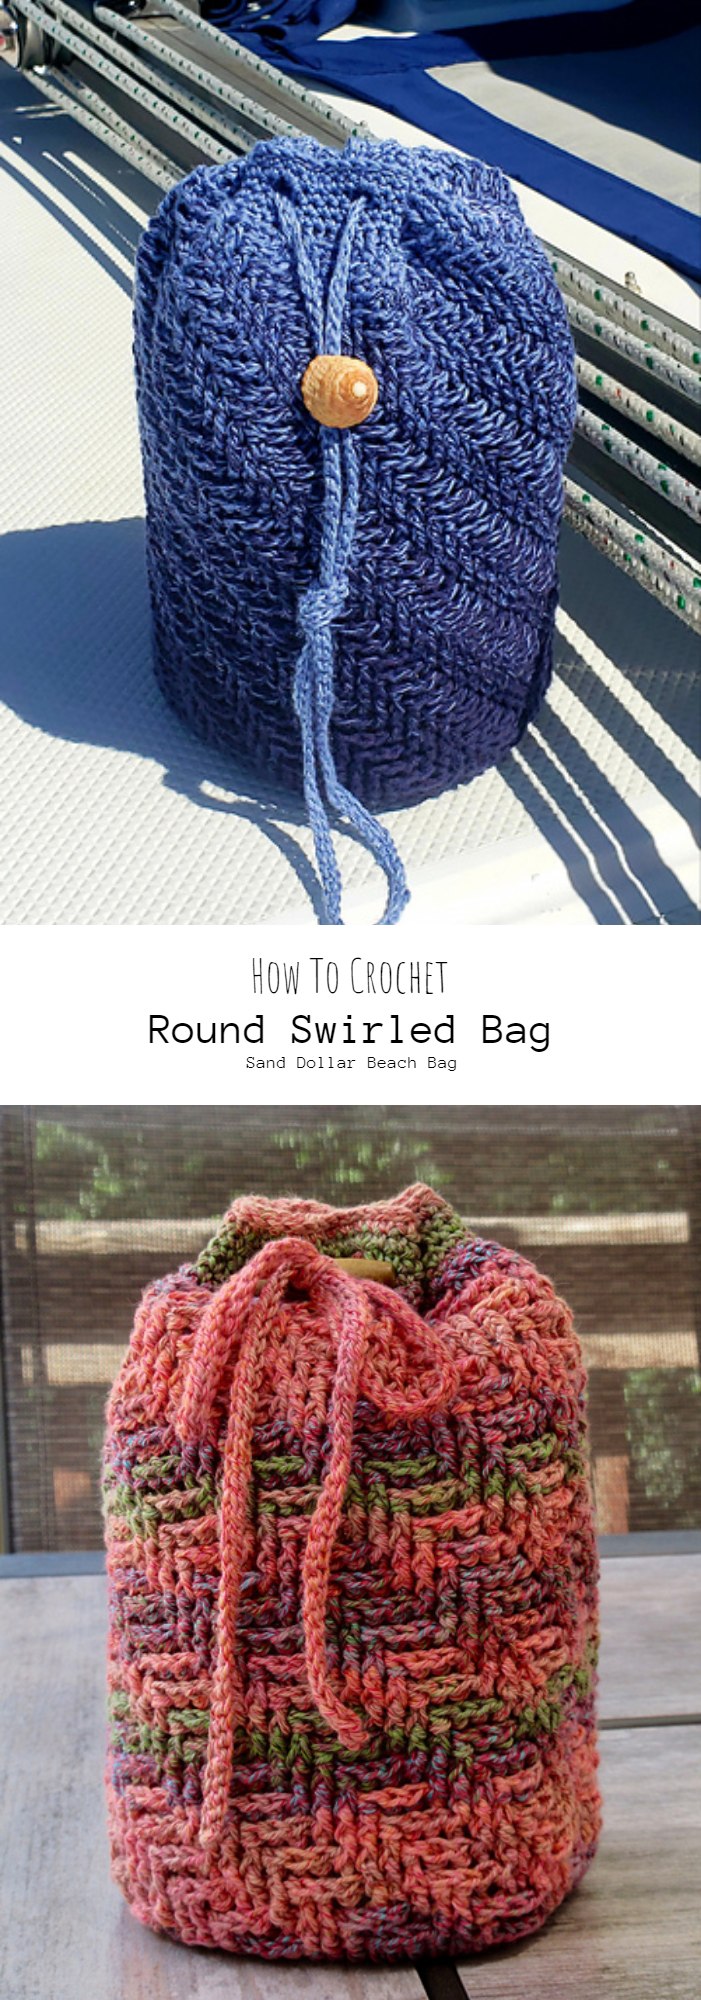 Crochet Round Swirled Bag - Sand Dollar Beach Bag